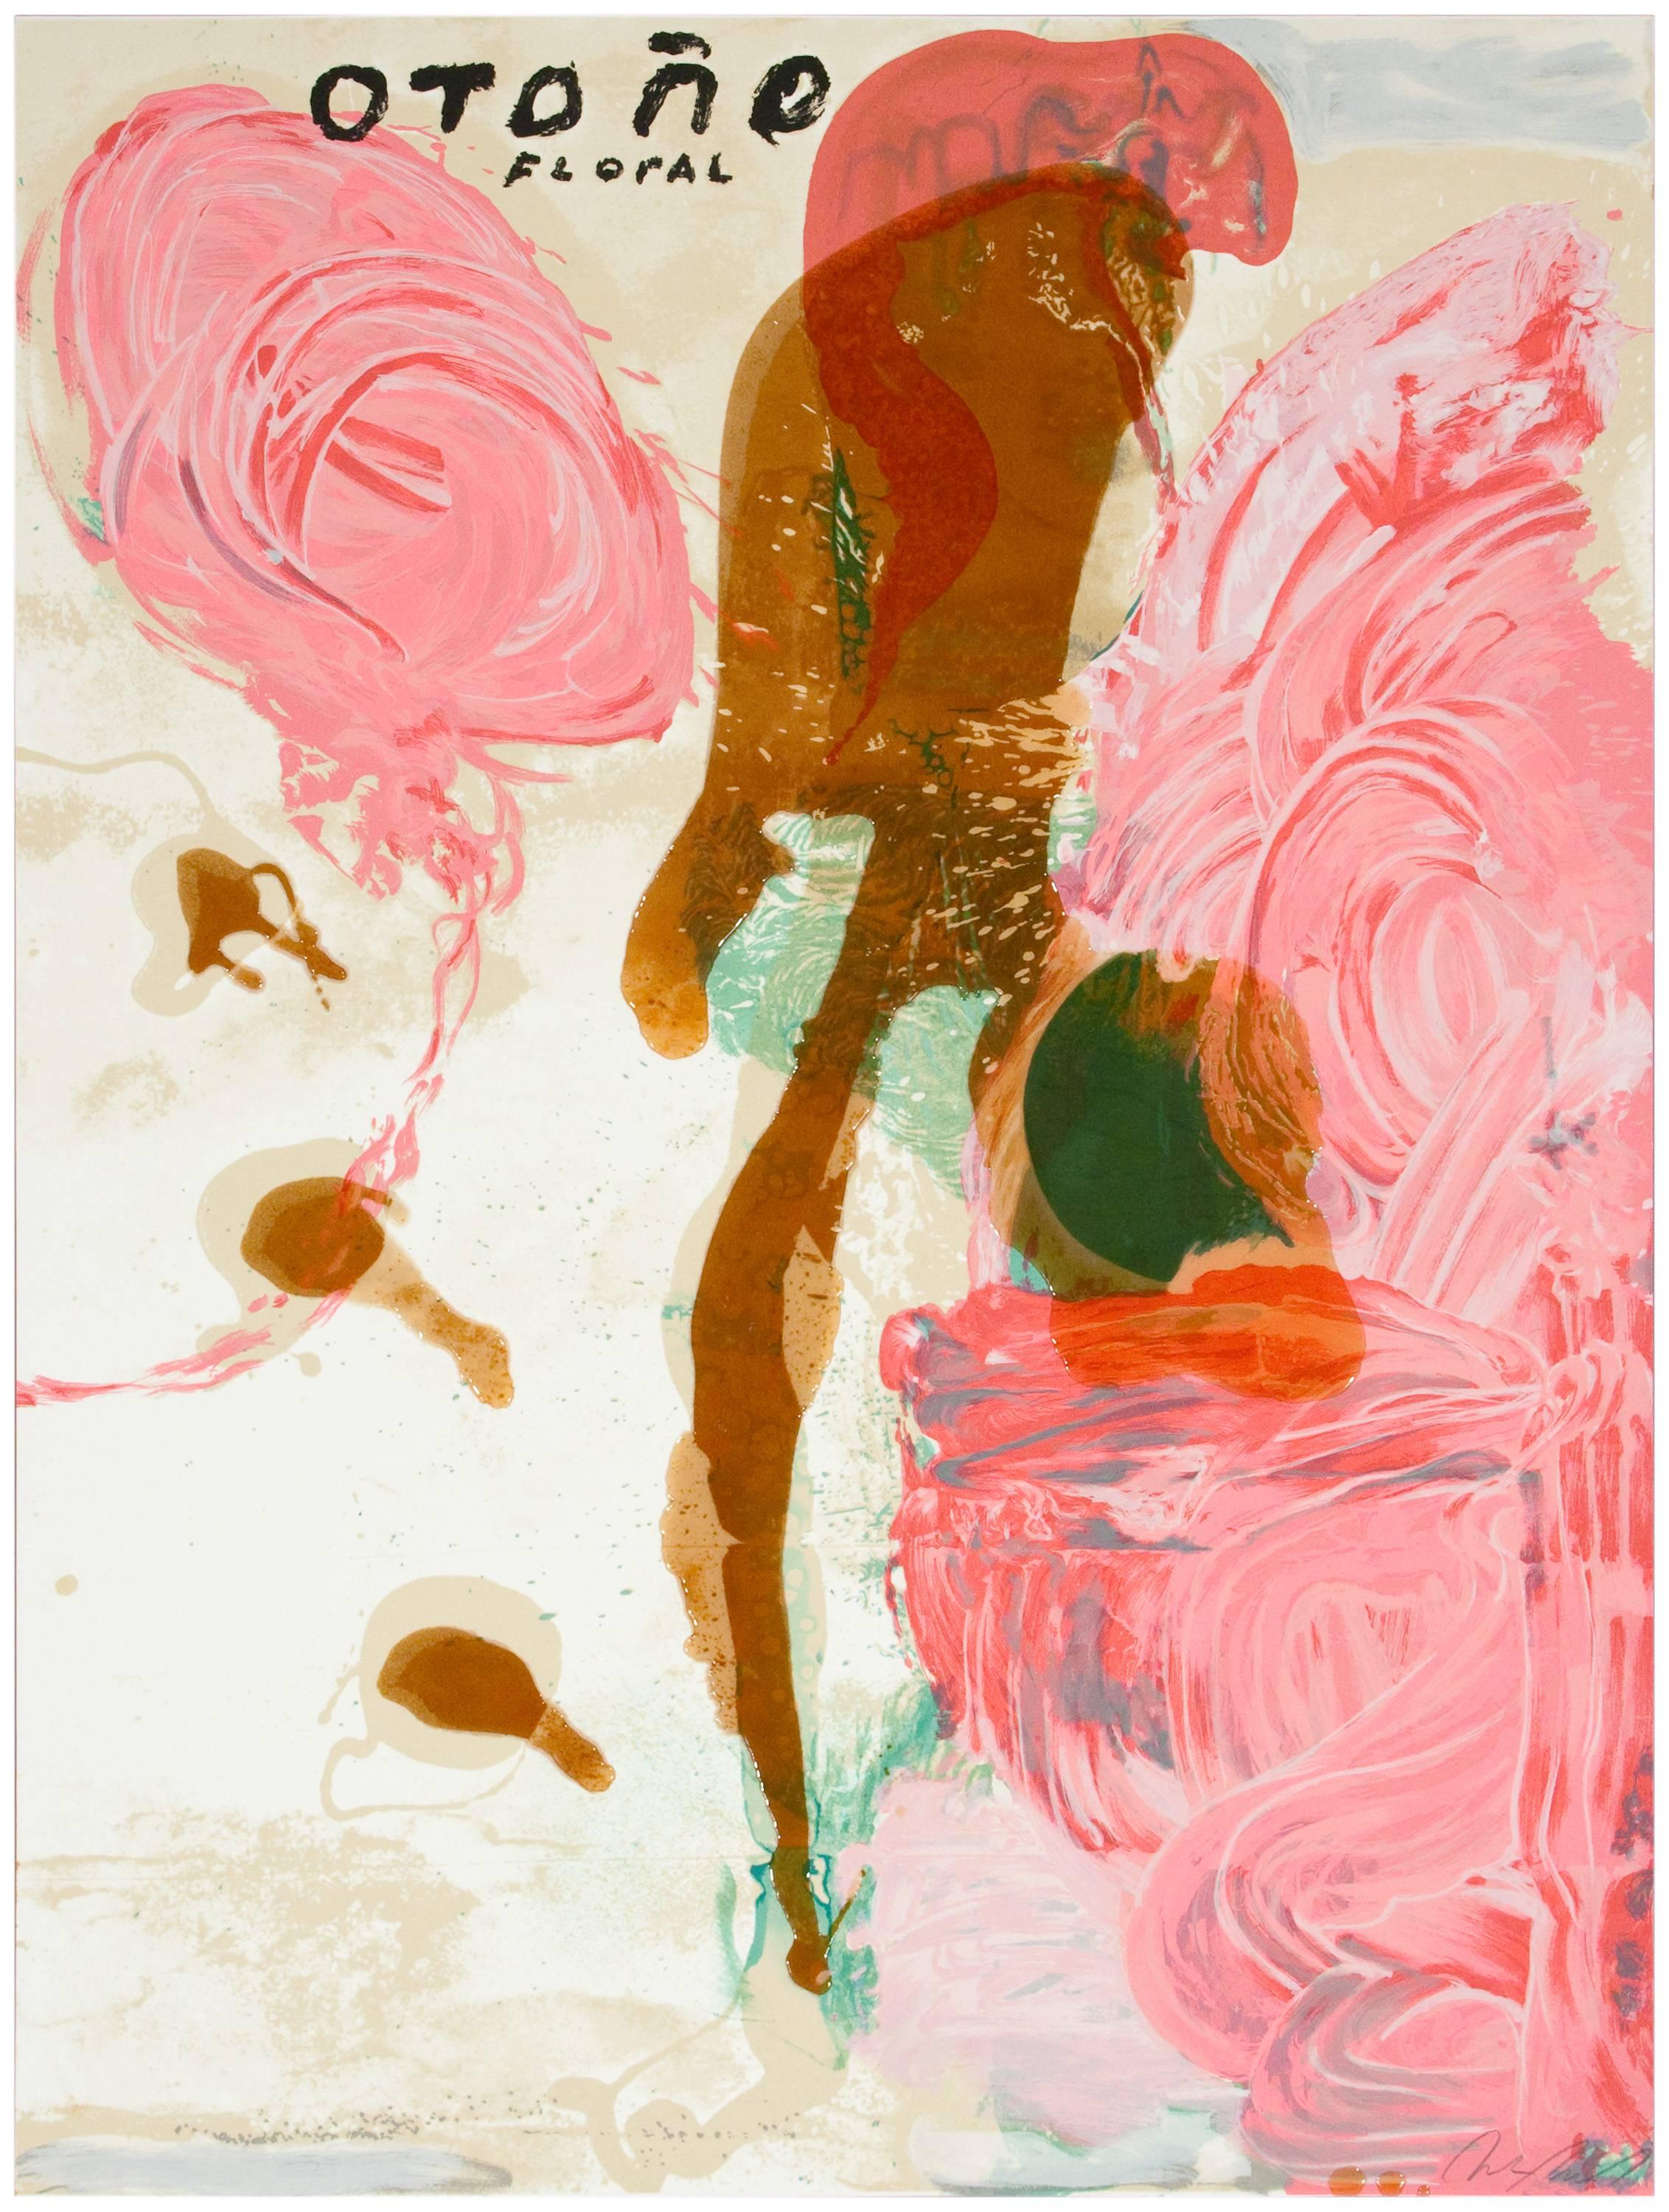 Figurative Print Julian Schnabel - Otono - Floral (sexuel - Automne-Hiver)